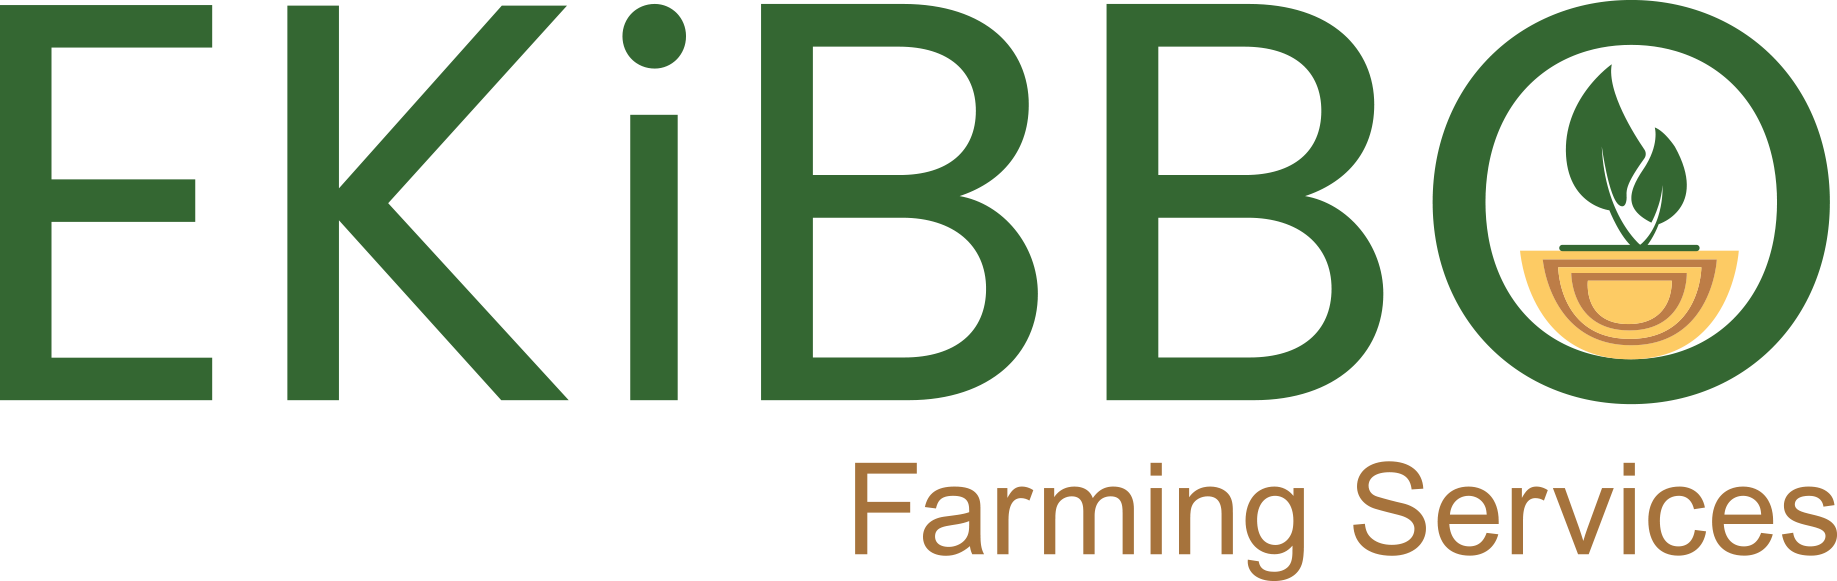 Ekibbo Farming Services